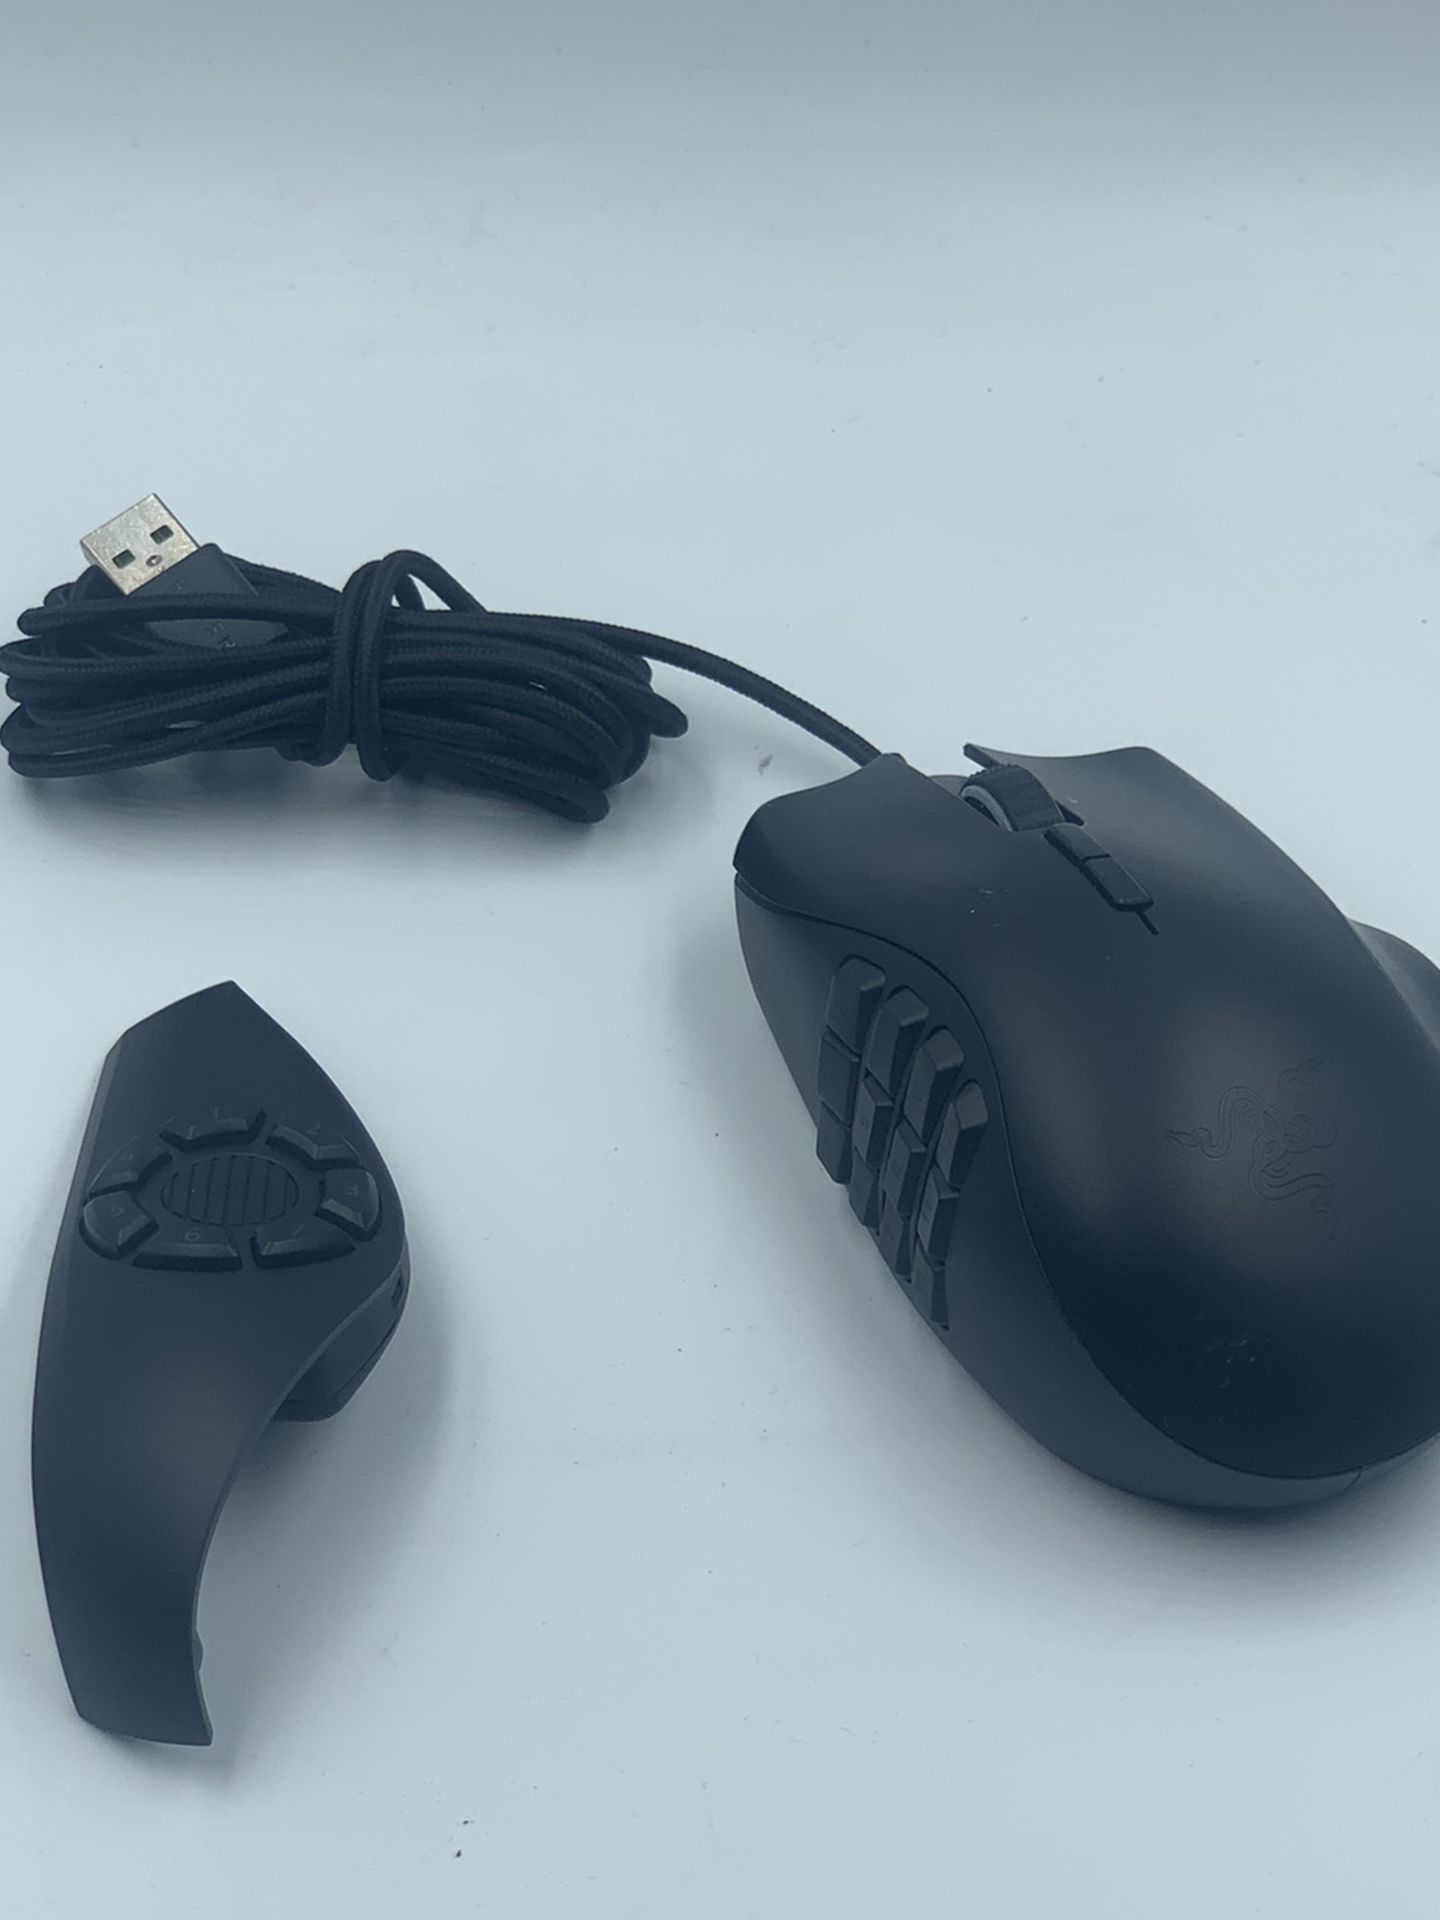 Razer Naga Trinity Wired Gaming Mouse - Black